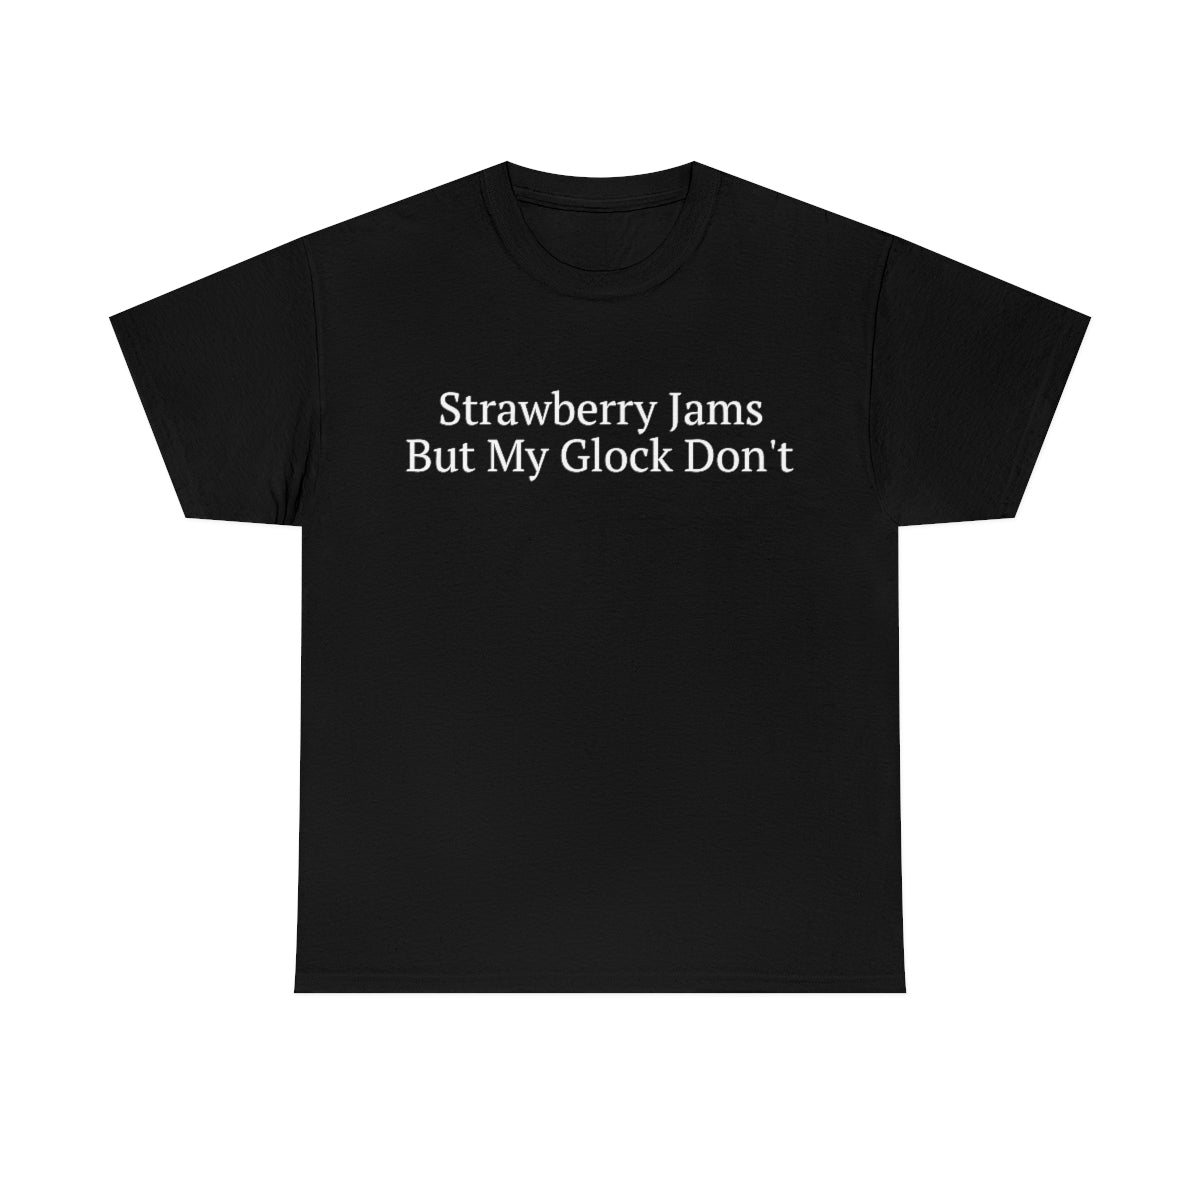 STRAWBERRY JAMS T-SHIRT